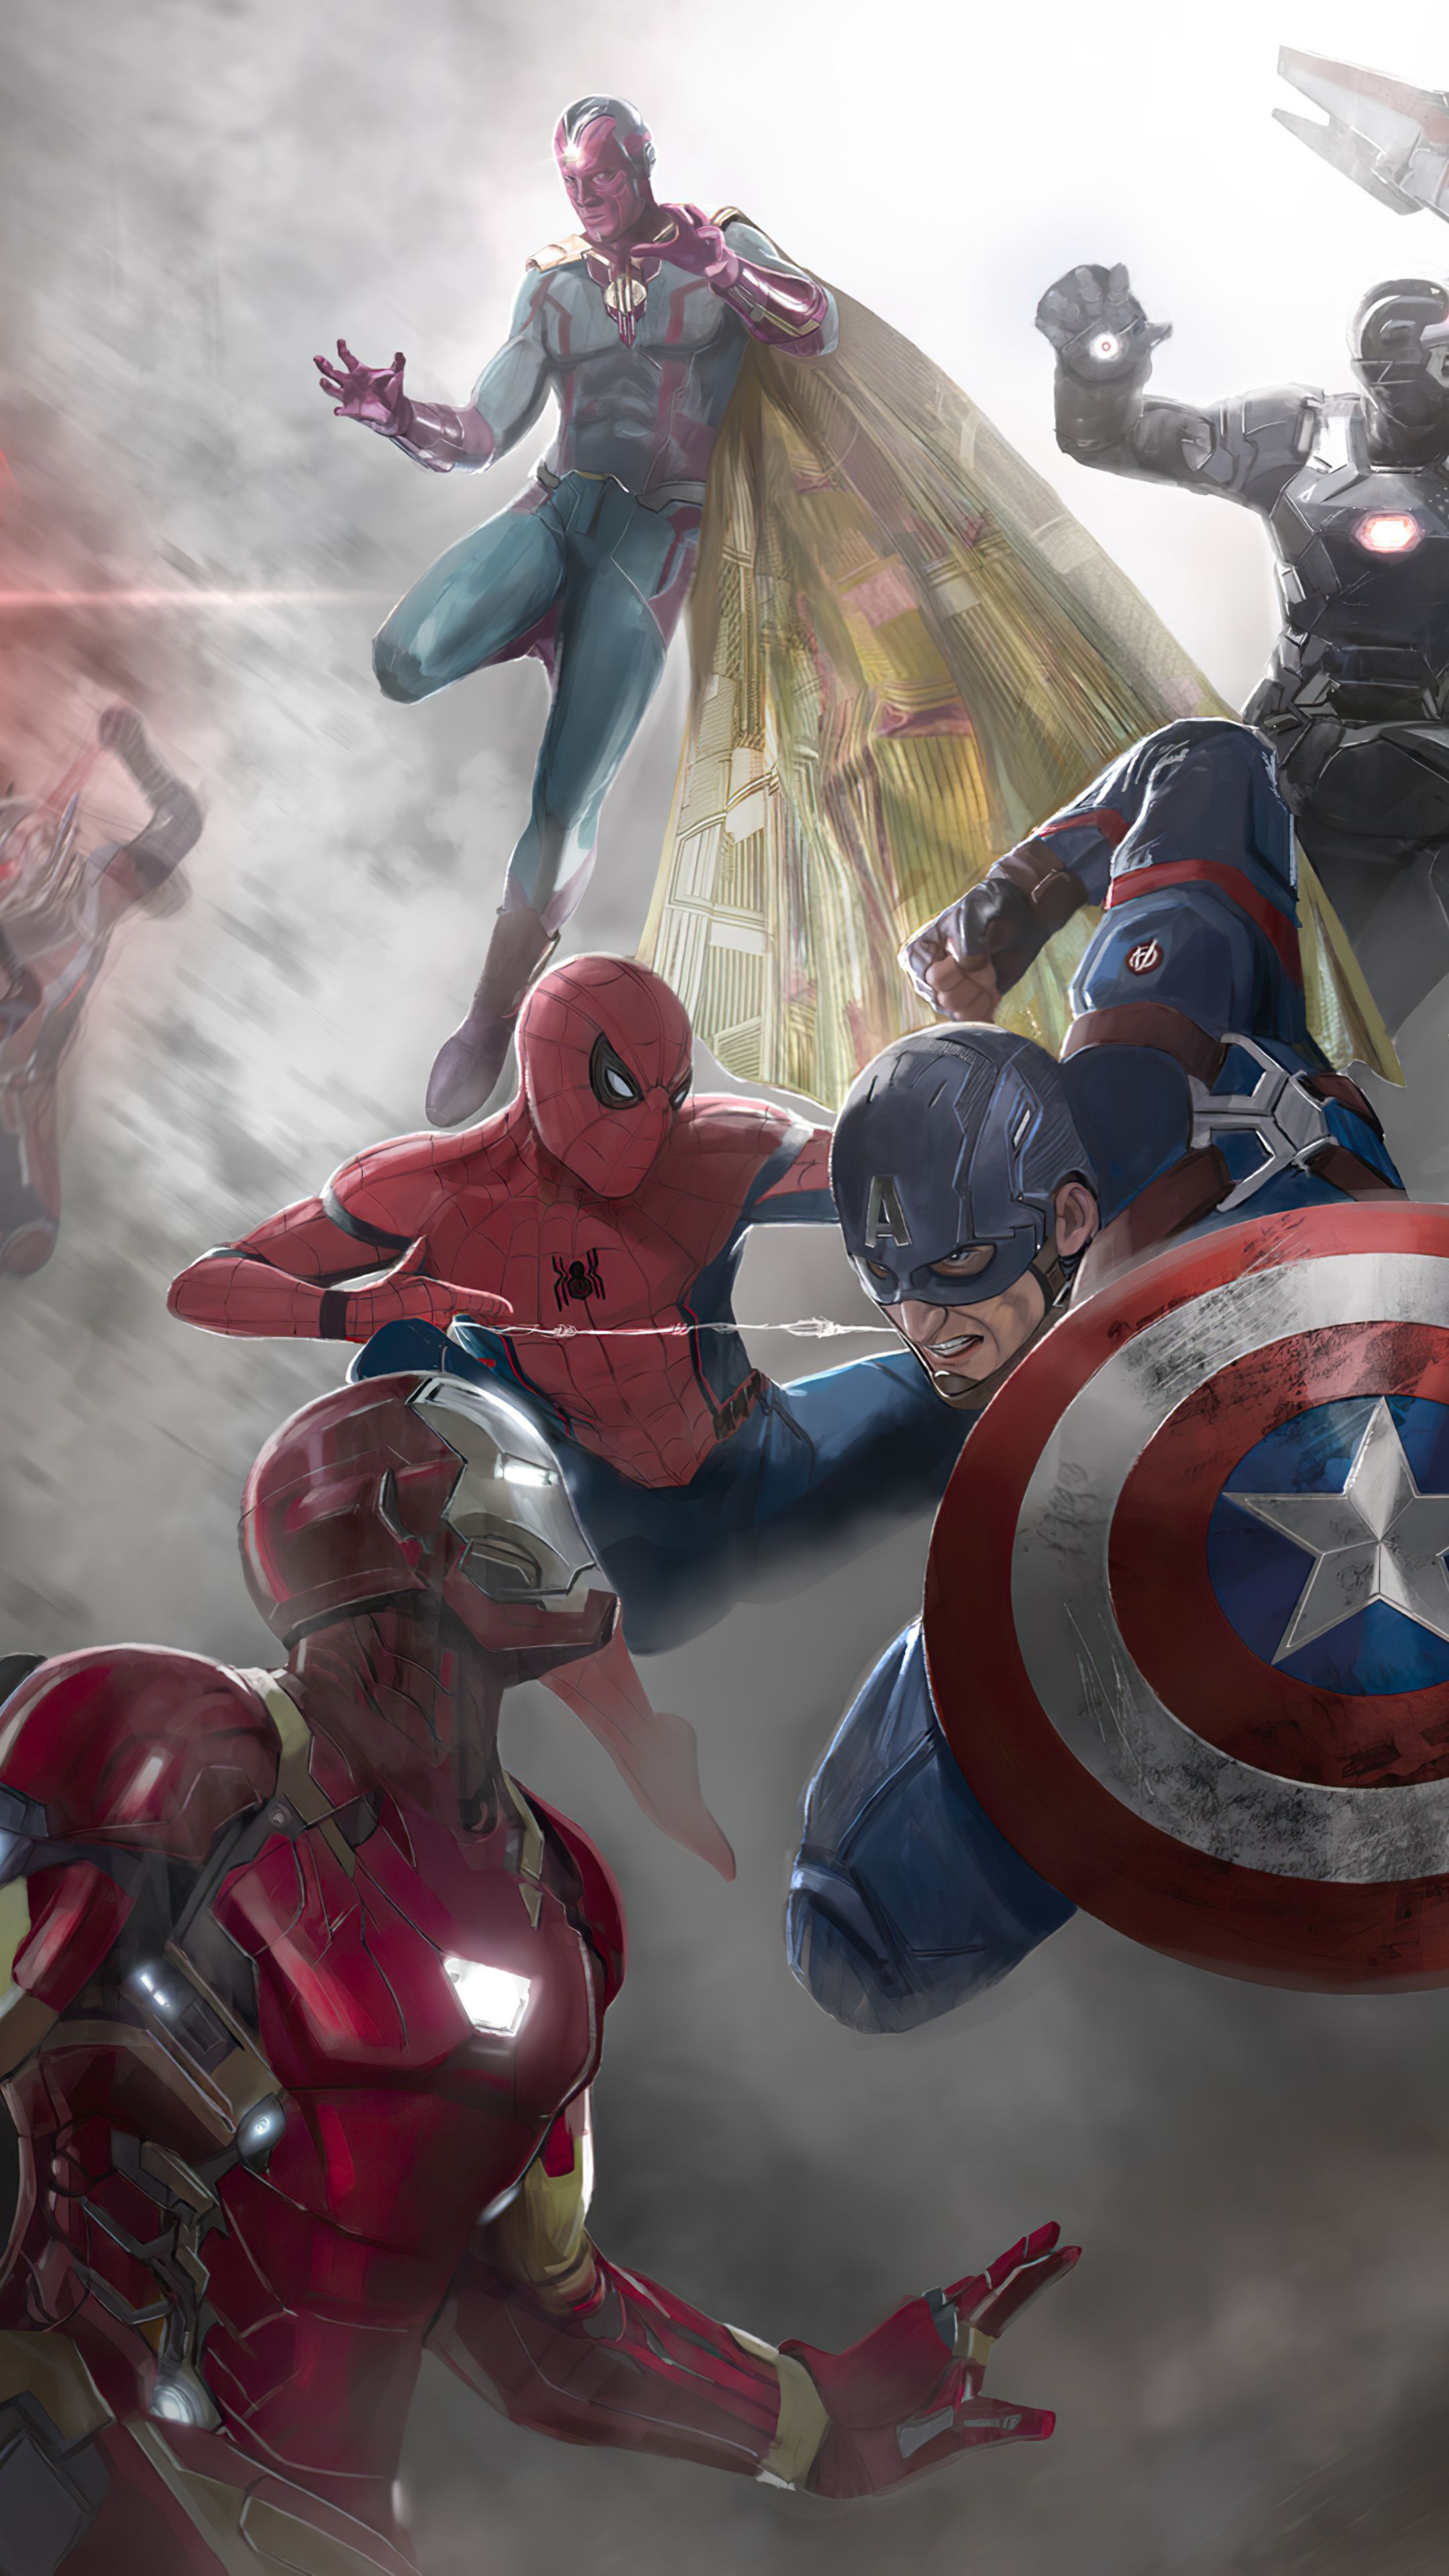 Captain America Civil War 4k 2020 Sony Xperia X, XZ, Z5 Premium HD 4k Wallpaper, Image, Background, Photo and Picture